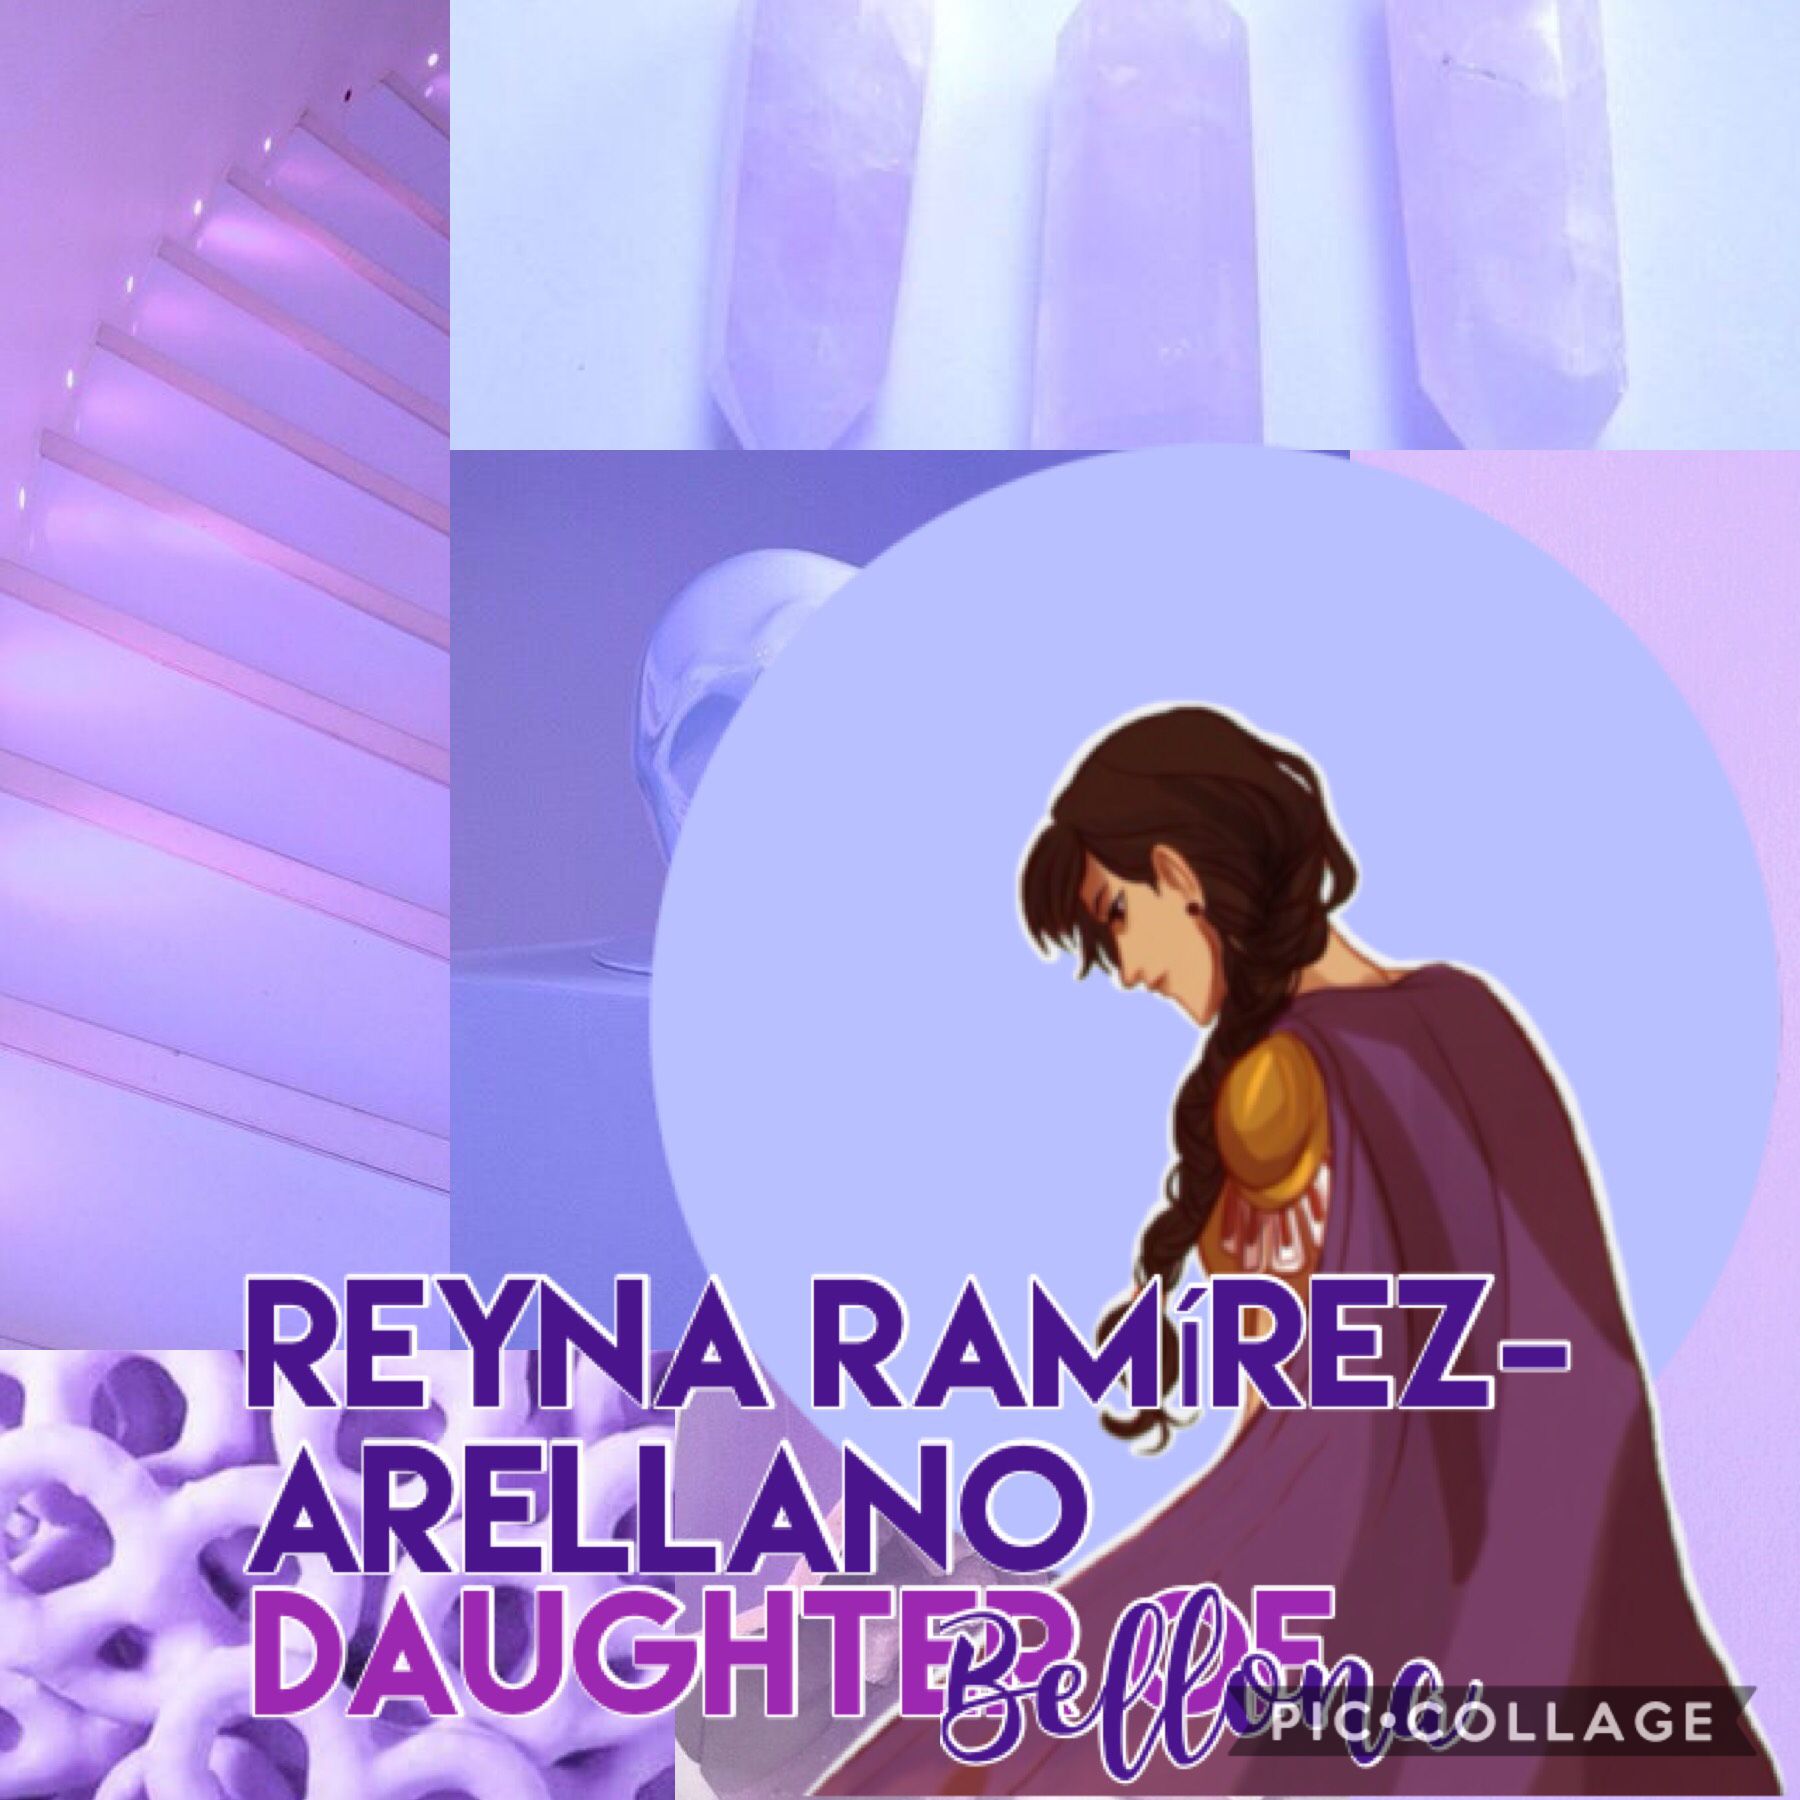 🗡🗡🗡
Reyna Ramírez-Arellano, Daughter of Bellona. Praetor